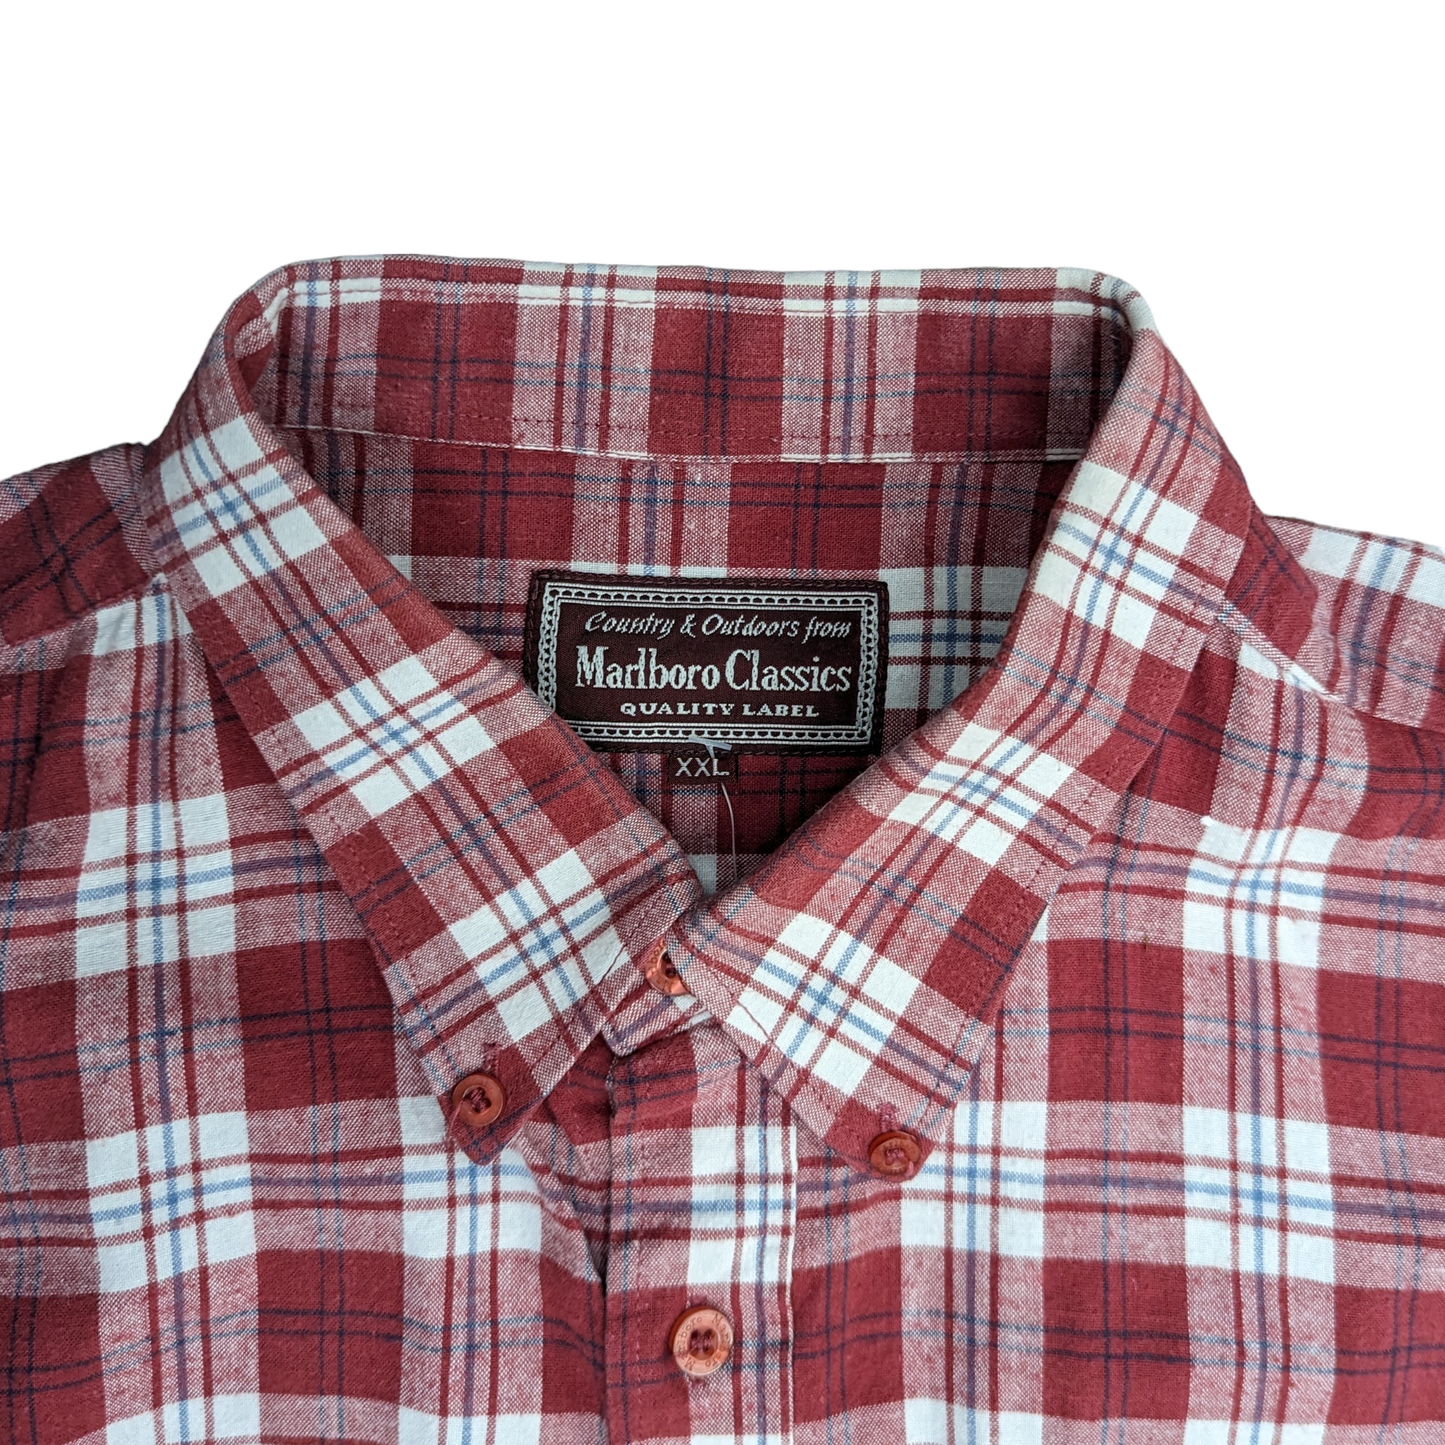 Vintage Marlboro Classics Check Shirt Size XXL